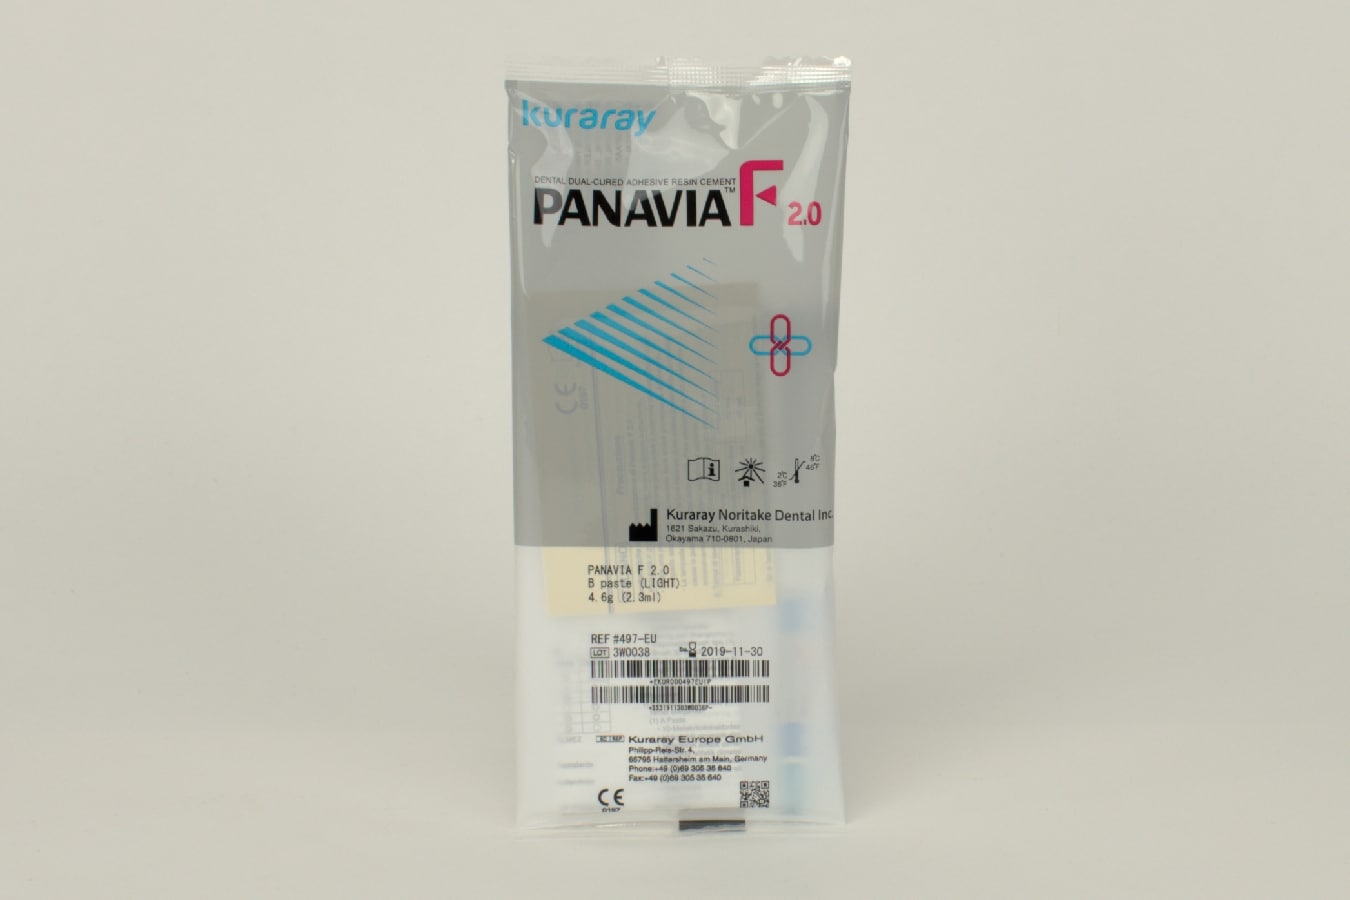 Panavia F 2.0 Pasta B Light 2,3ml